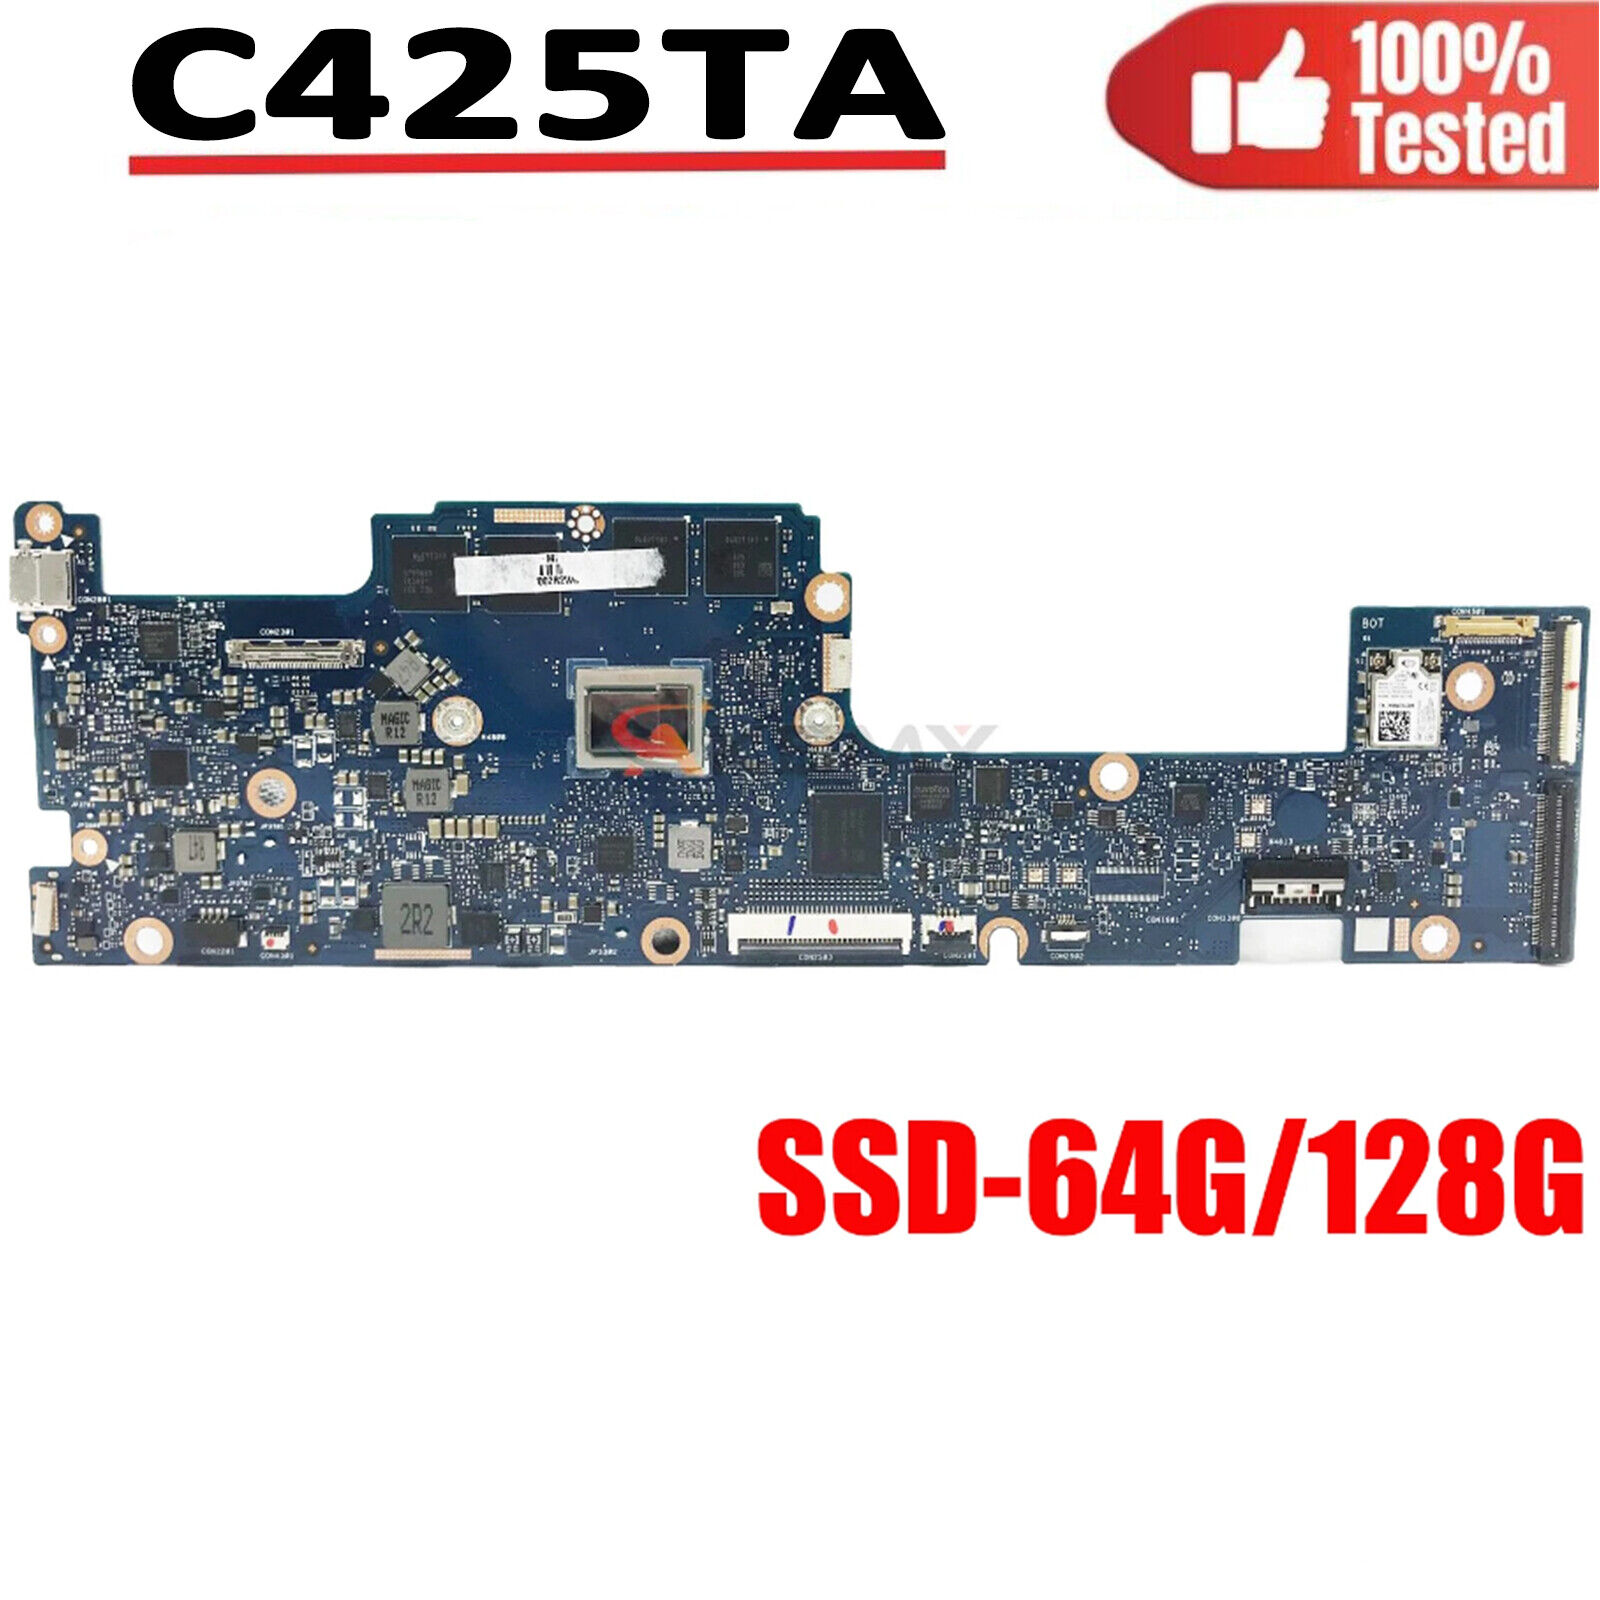 C425ta Mainboard For Asus Chromebook C425 C425ta W/ M3 Cpu 4gb-ram Ssd-64g/128g